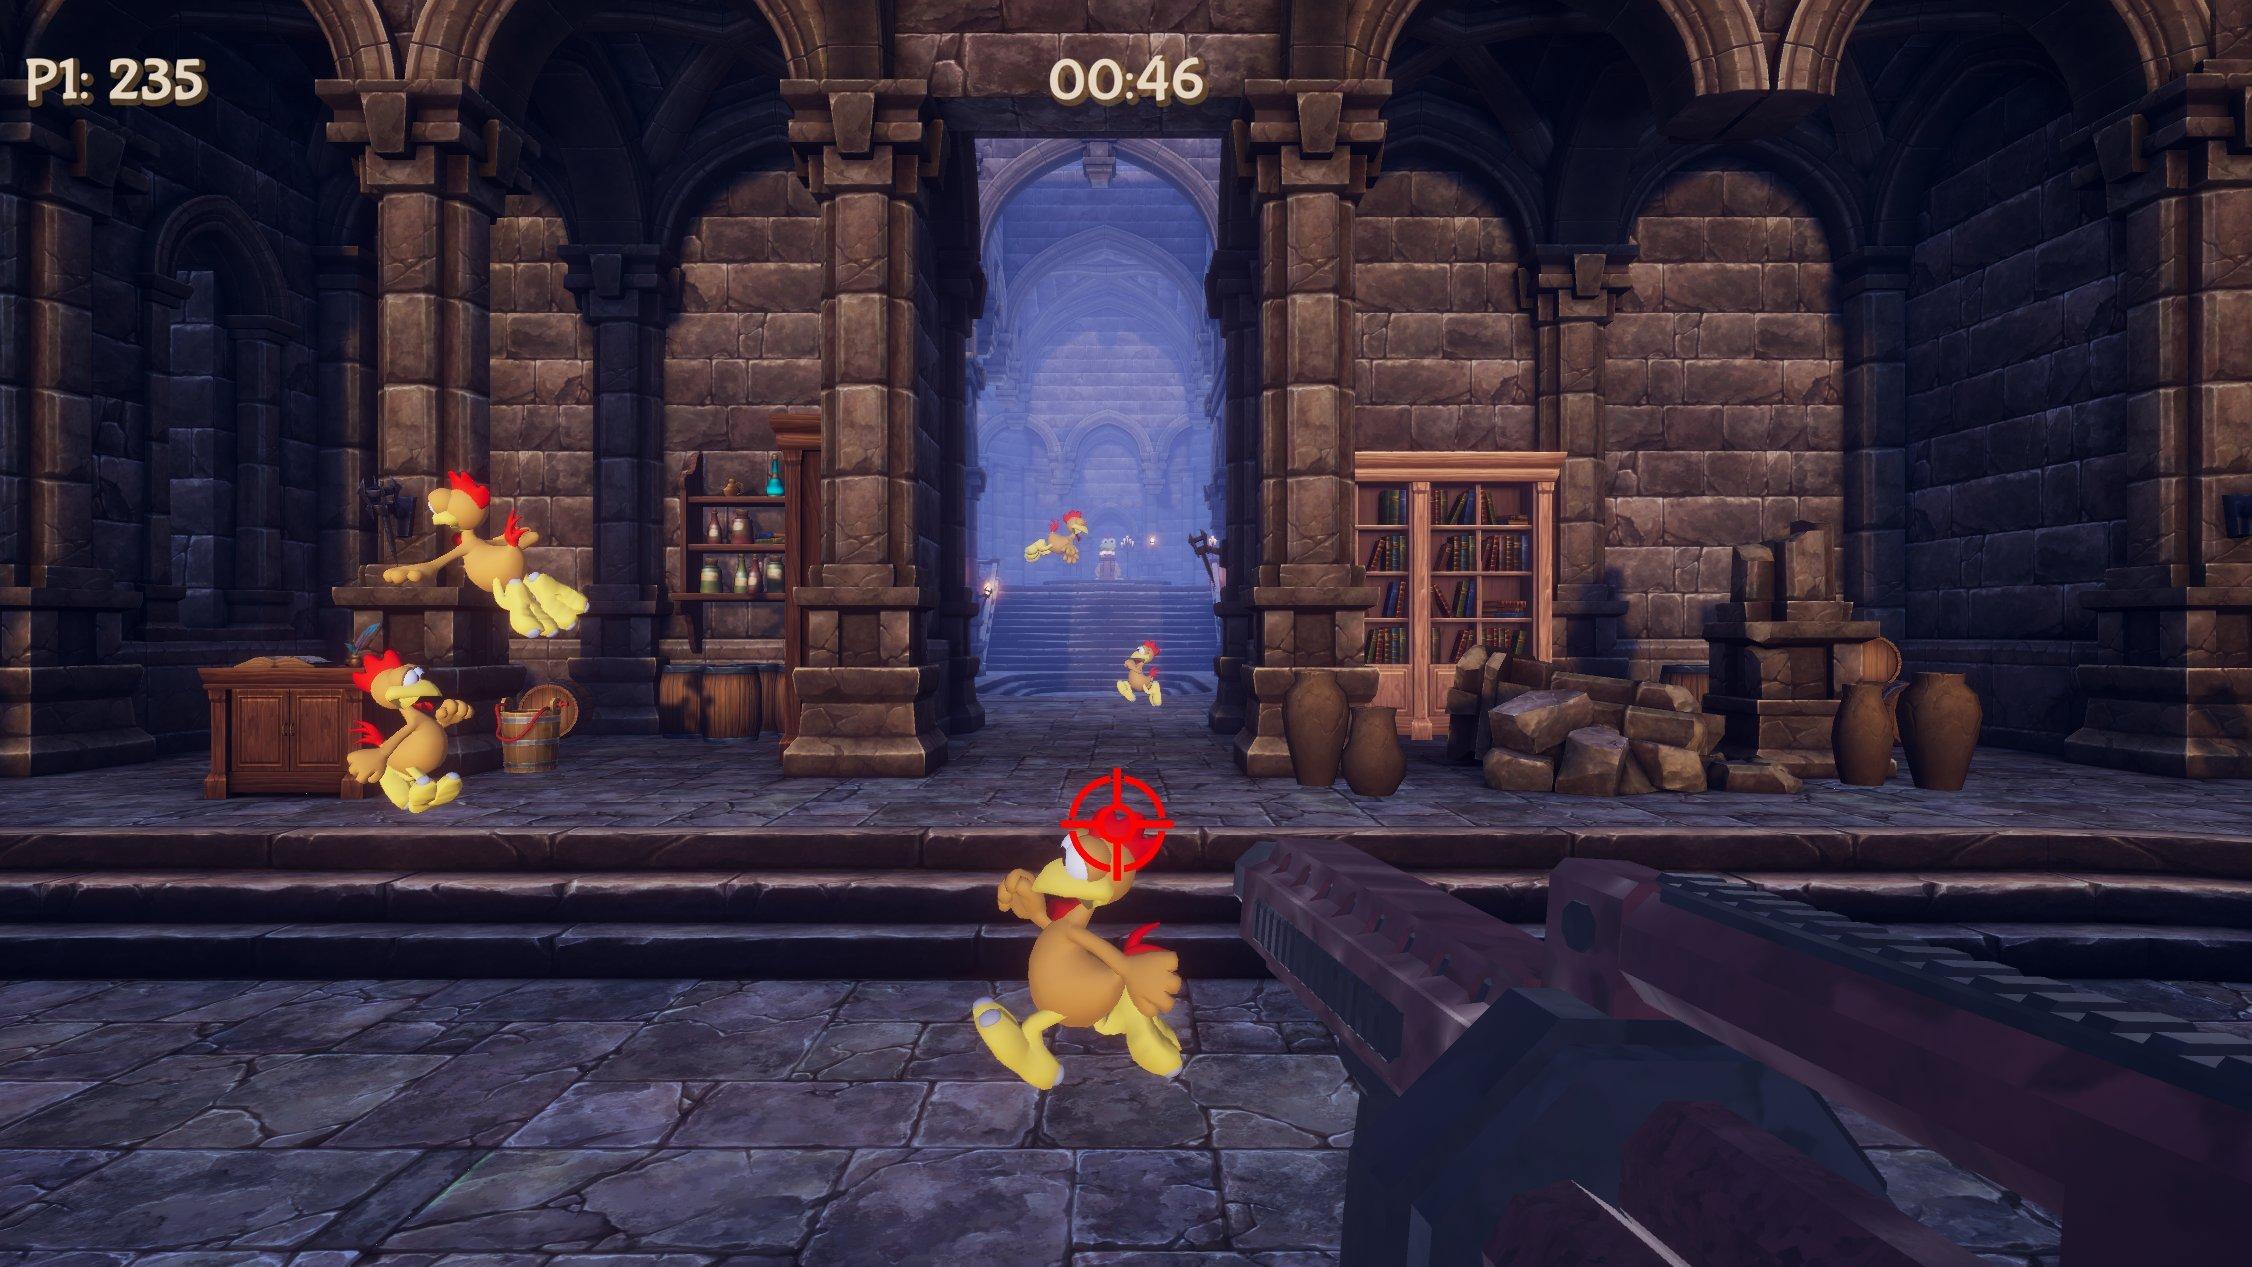 Crazy Chicken Xtreme - PlayStation 4